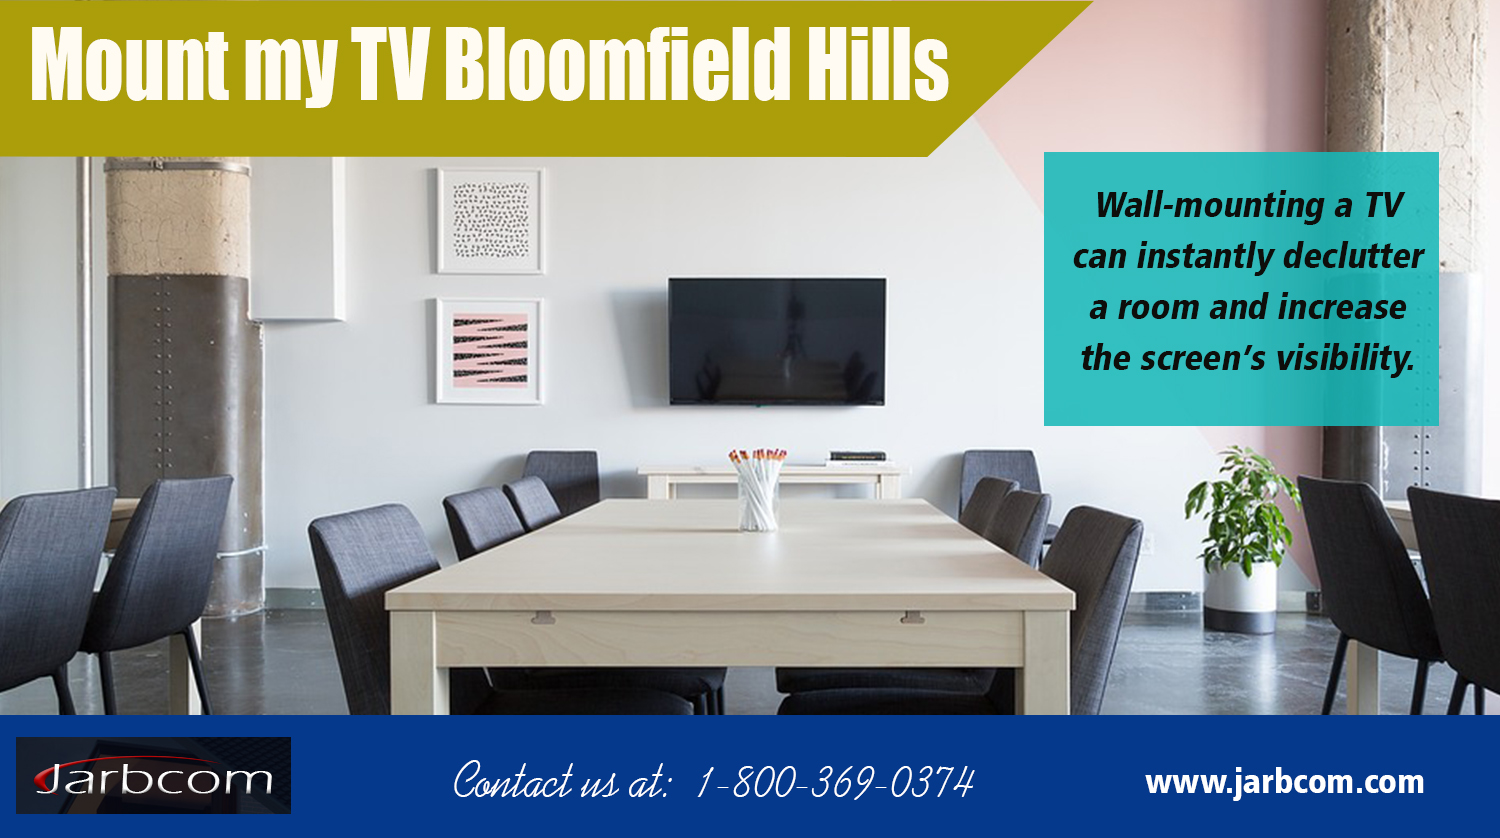 Mount my TV Bloomfield Hills